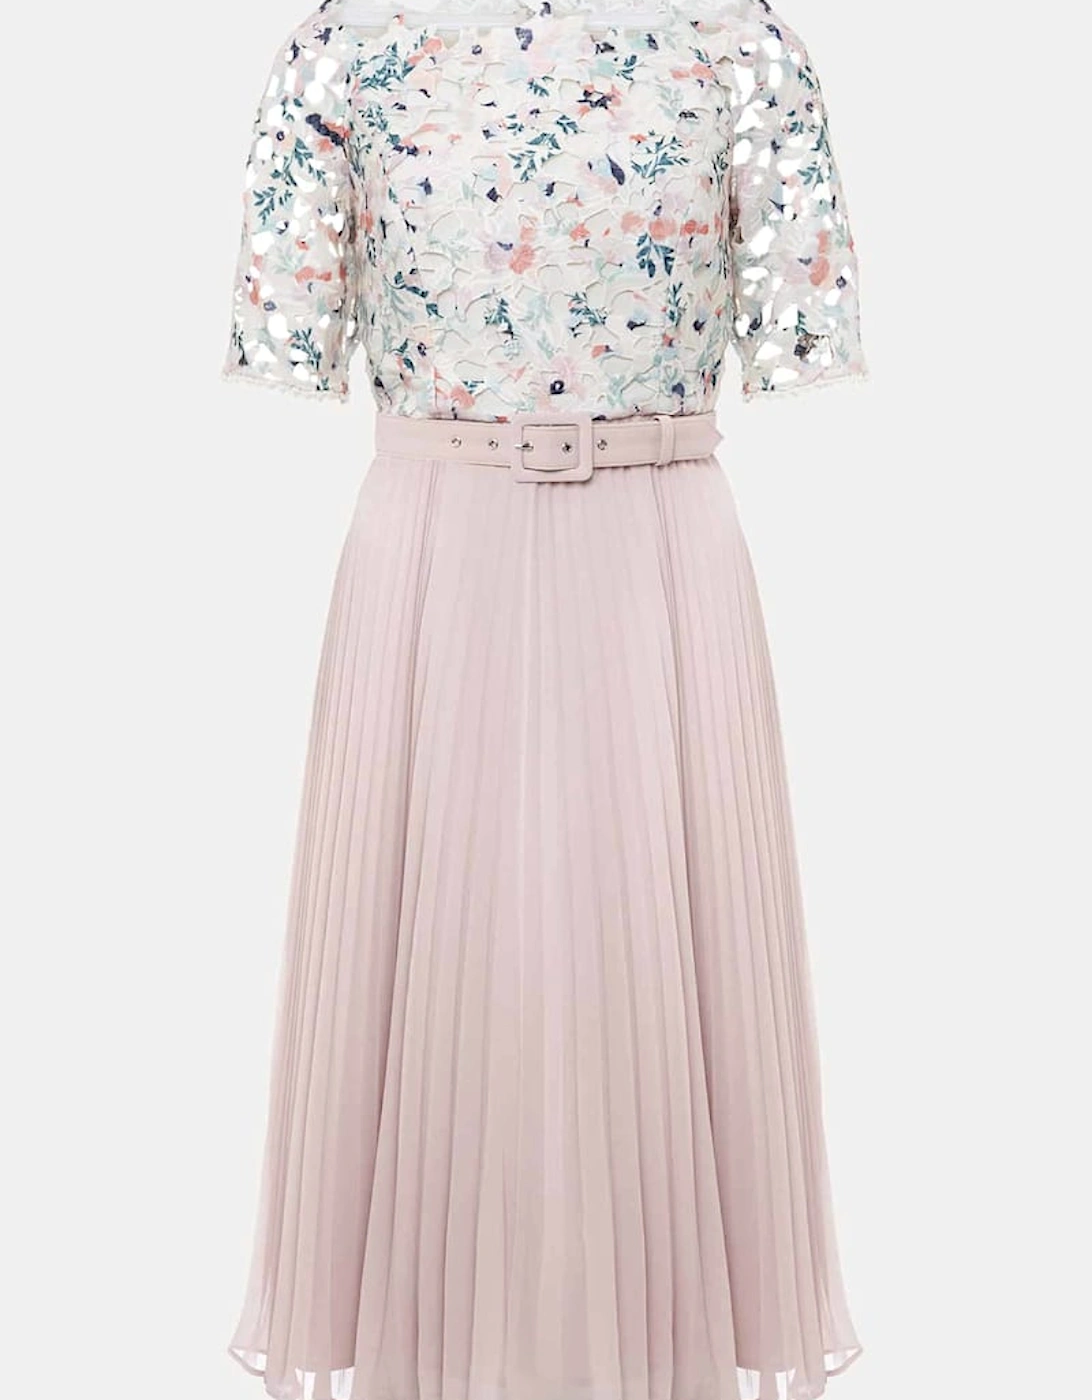 Franky Floral Lace Midi Dress